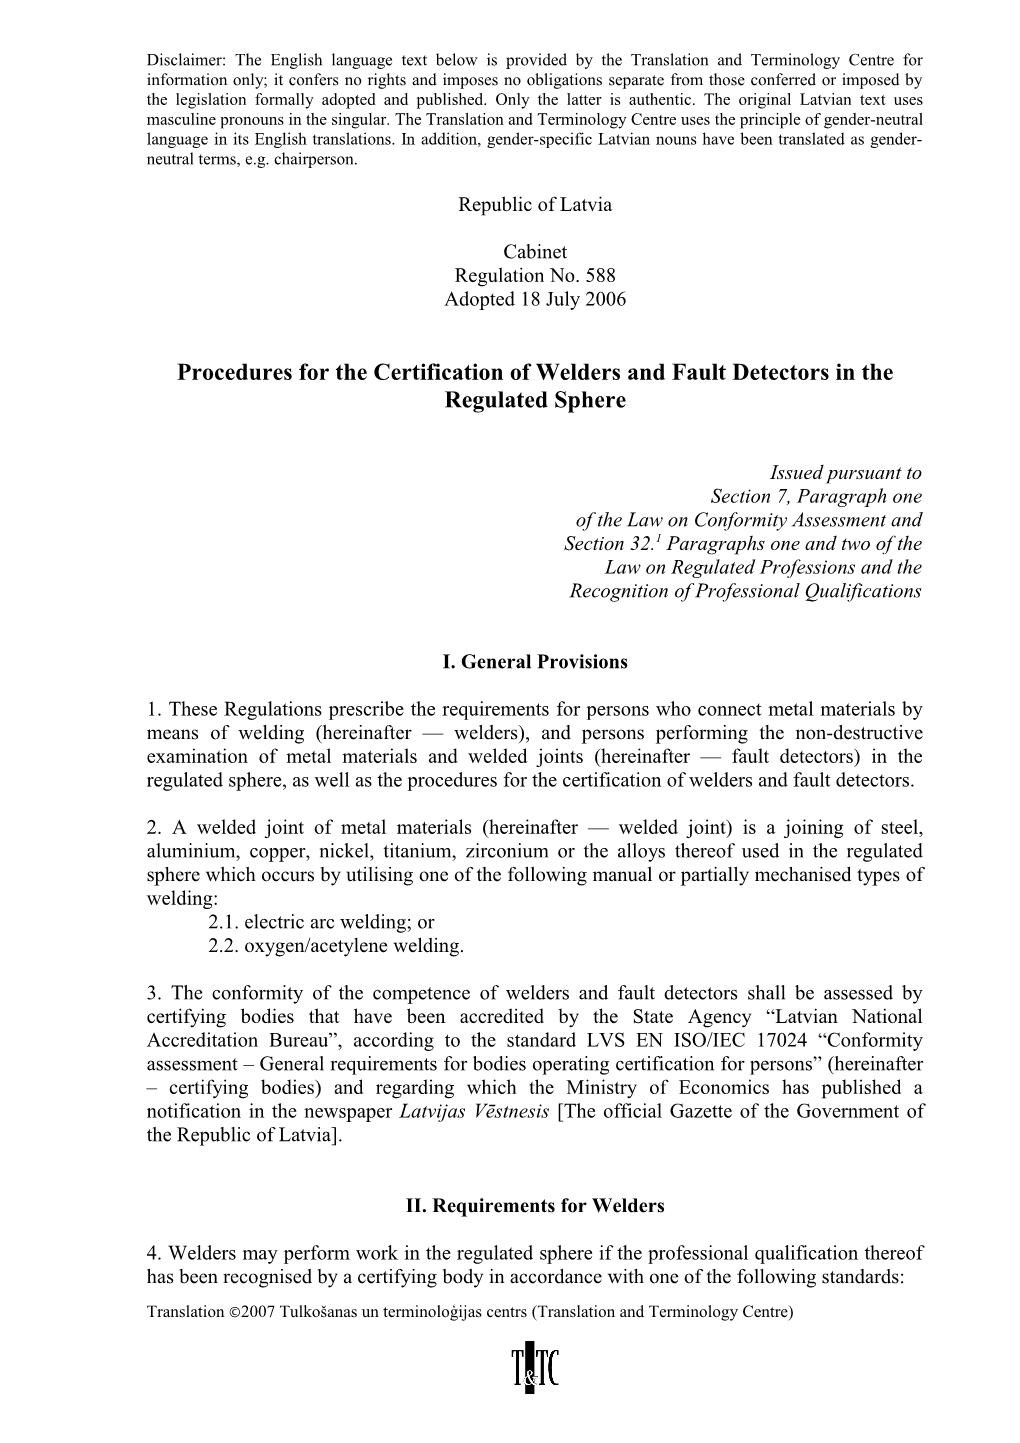 Procedures for the Certification of Welders and Fault Detectors in the Regulated Sphere